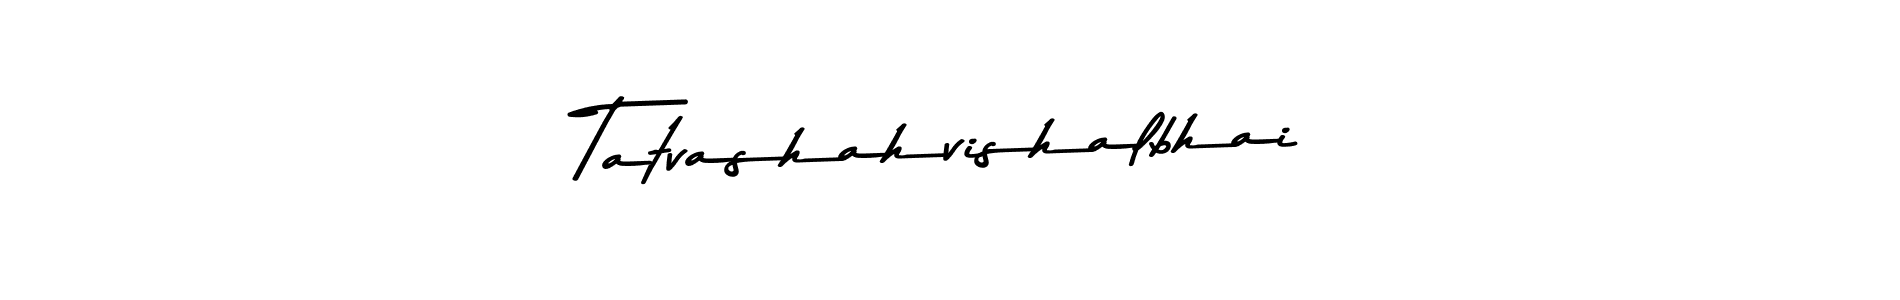 How to Draw Tatvashahvishalbhai signature style? Asem Kandis PERSONAL USE is a latest design signature styles for name Tatvashahvishalbhai. Tatvashahvishalbhai signature style 9 images and pictures png